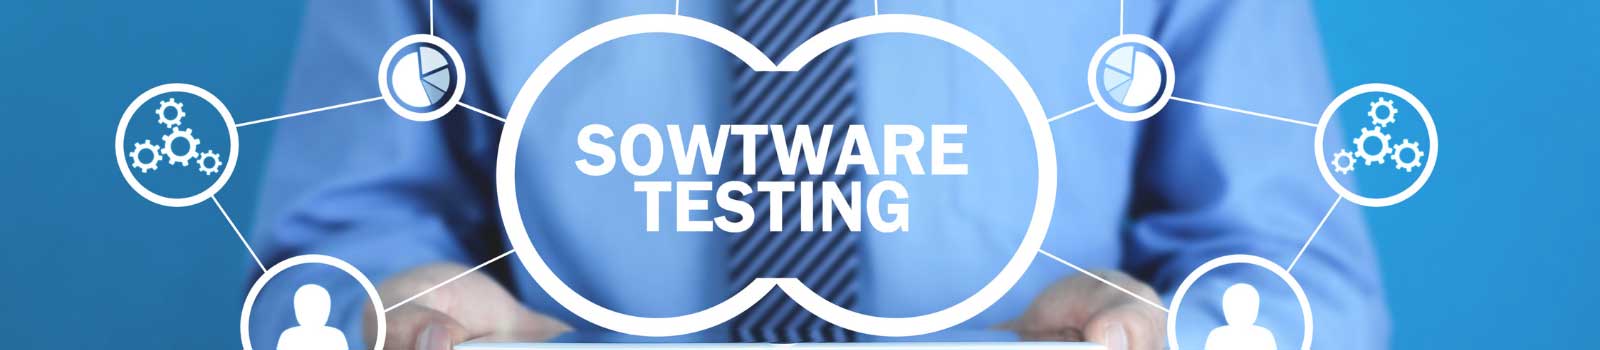 6 Software Testing Essentials For Better E commerce Portals